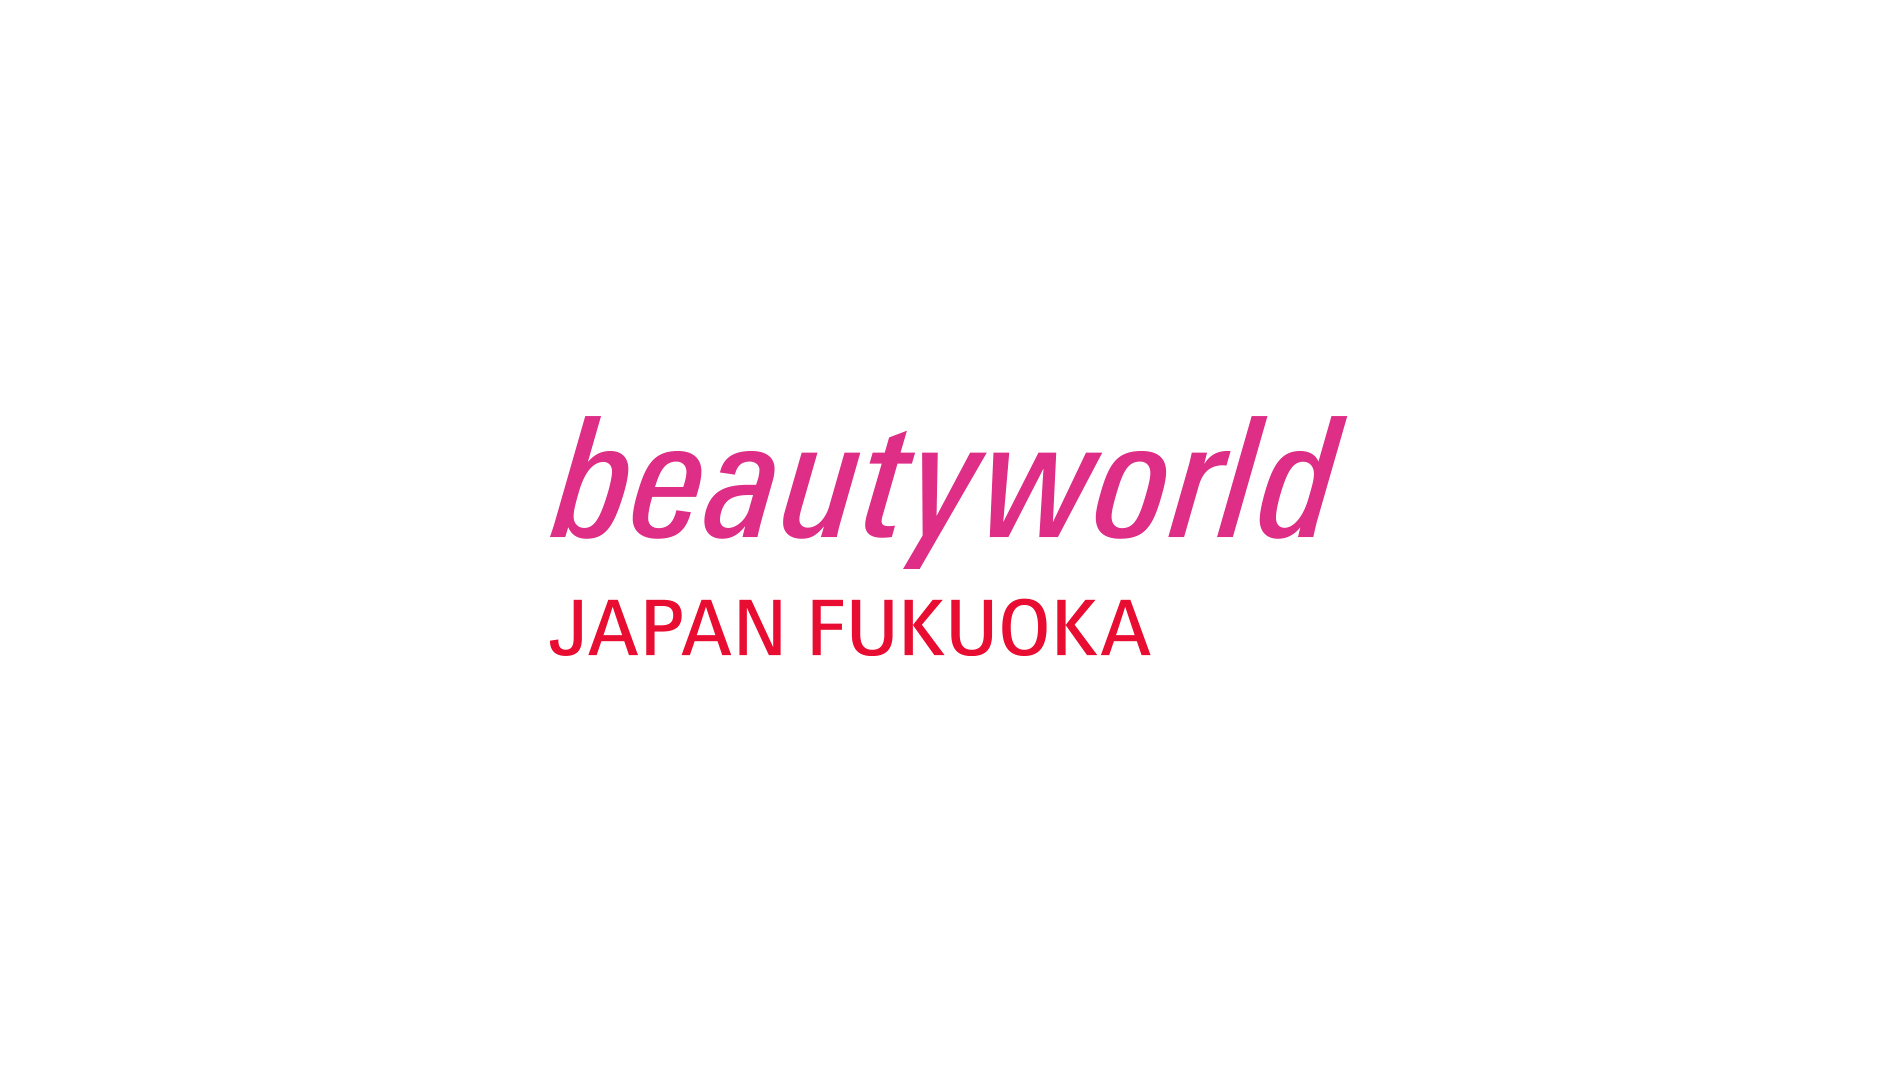 Beautyworld Japan Fukuoka Logo